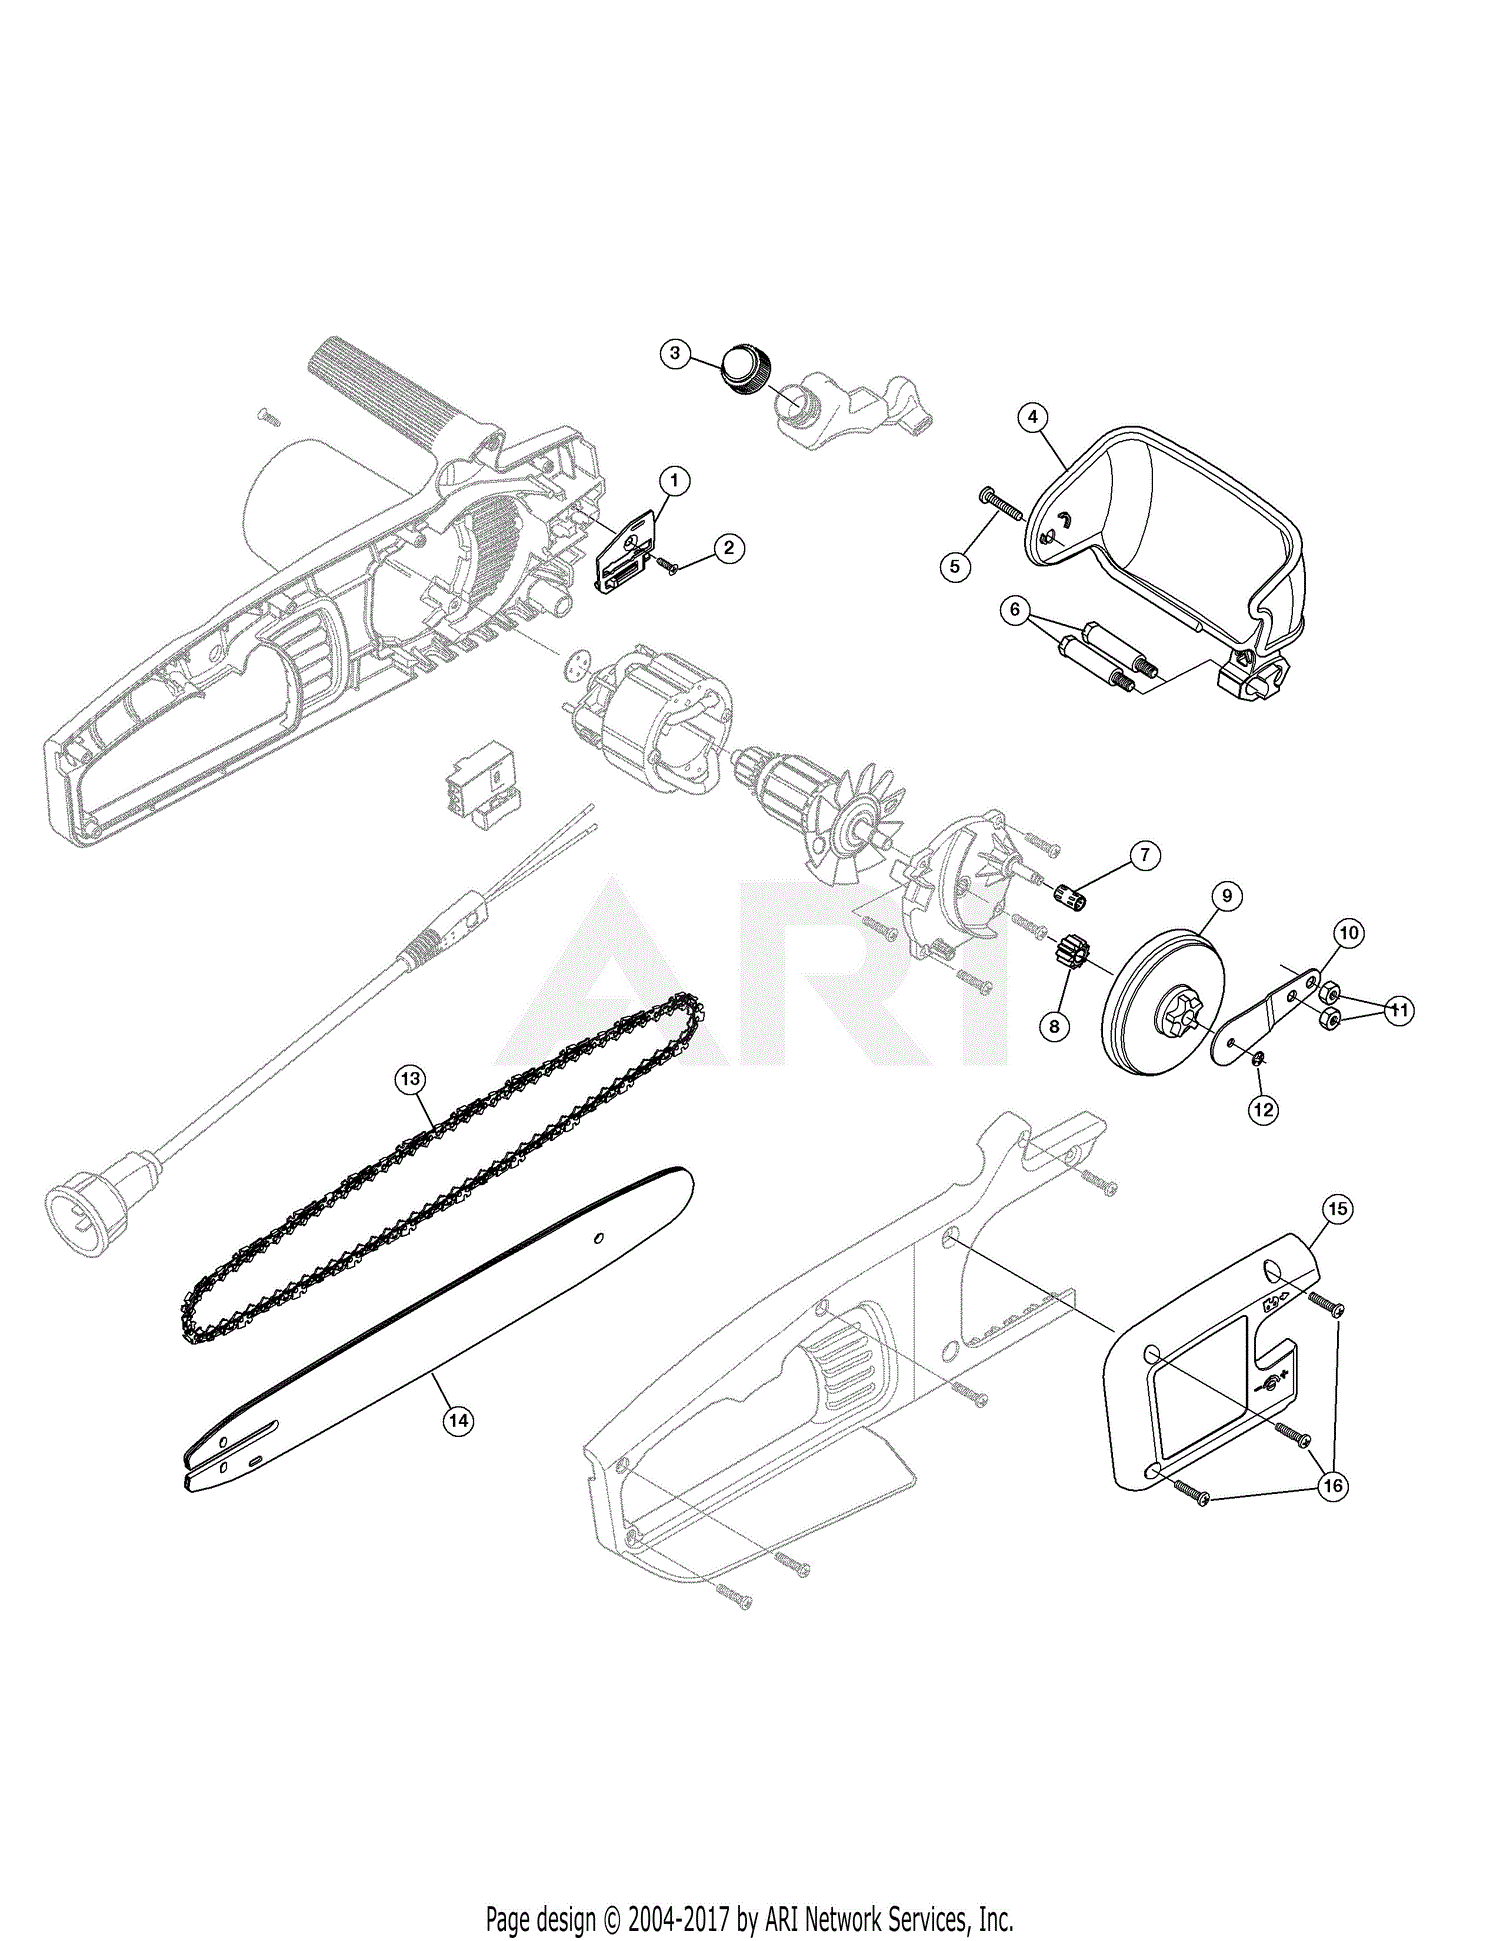 Remington Electric Chainsaw Parts Diagram - Free Wiring Diagram